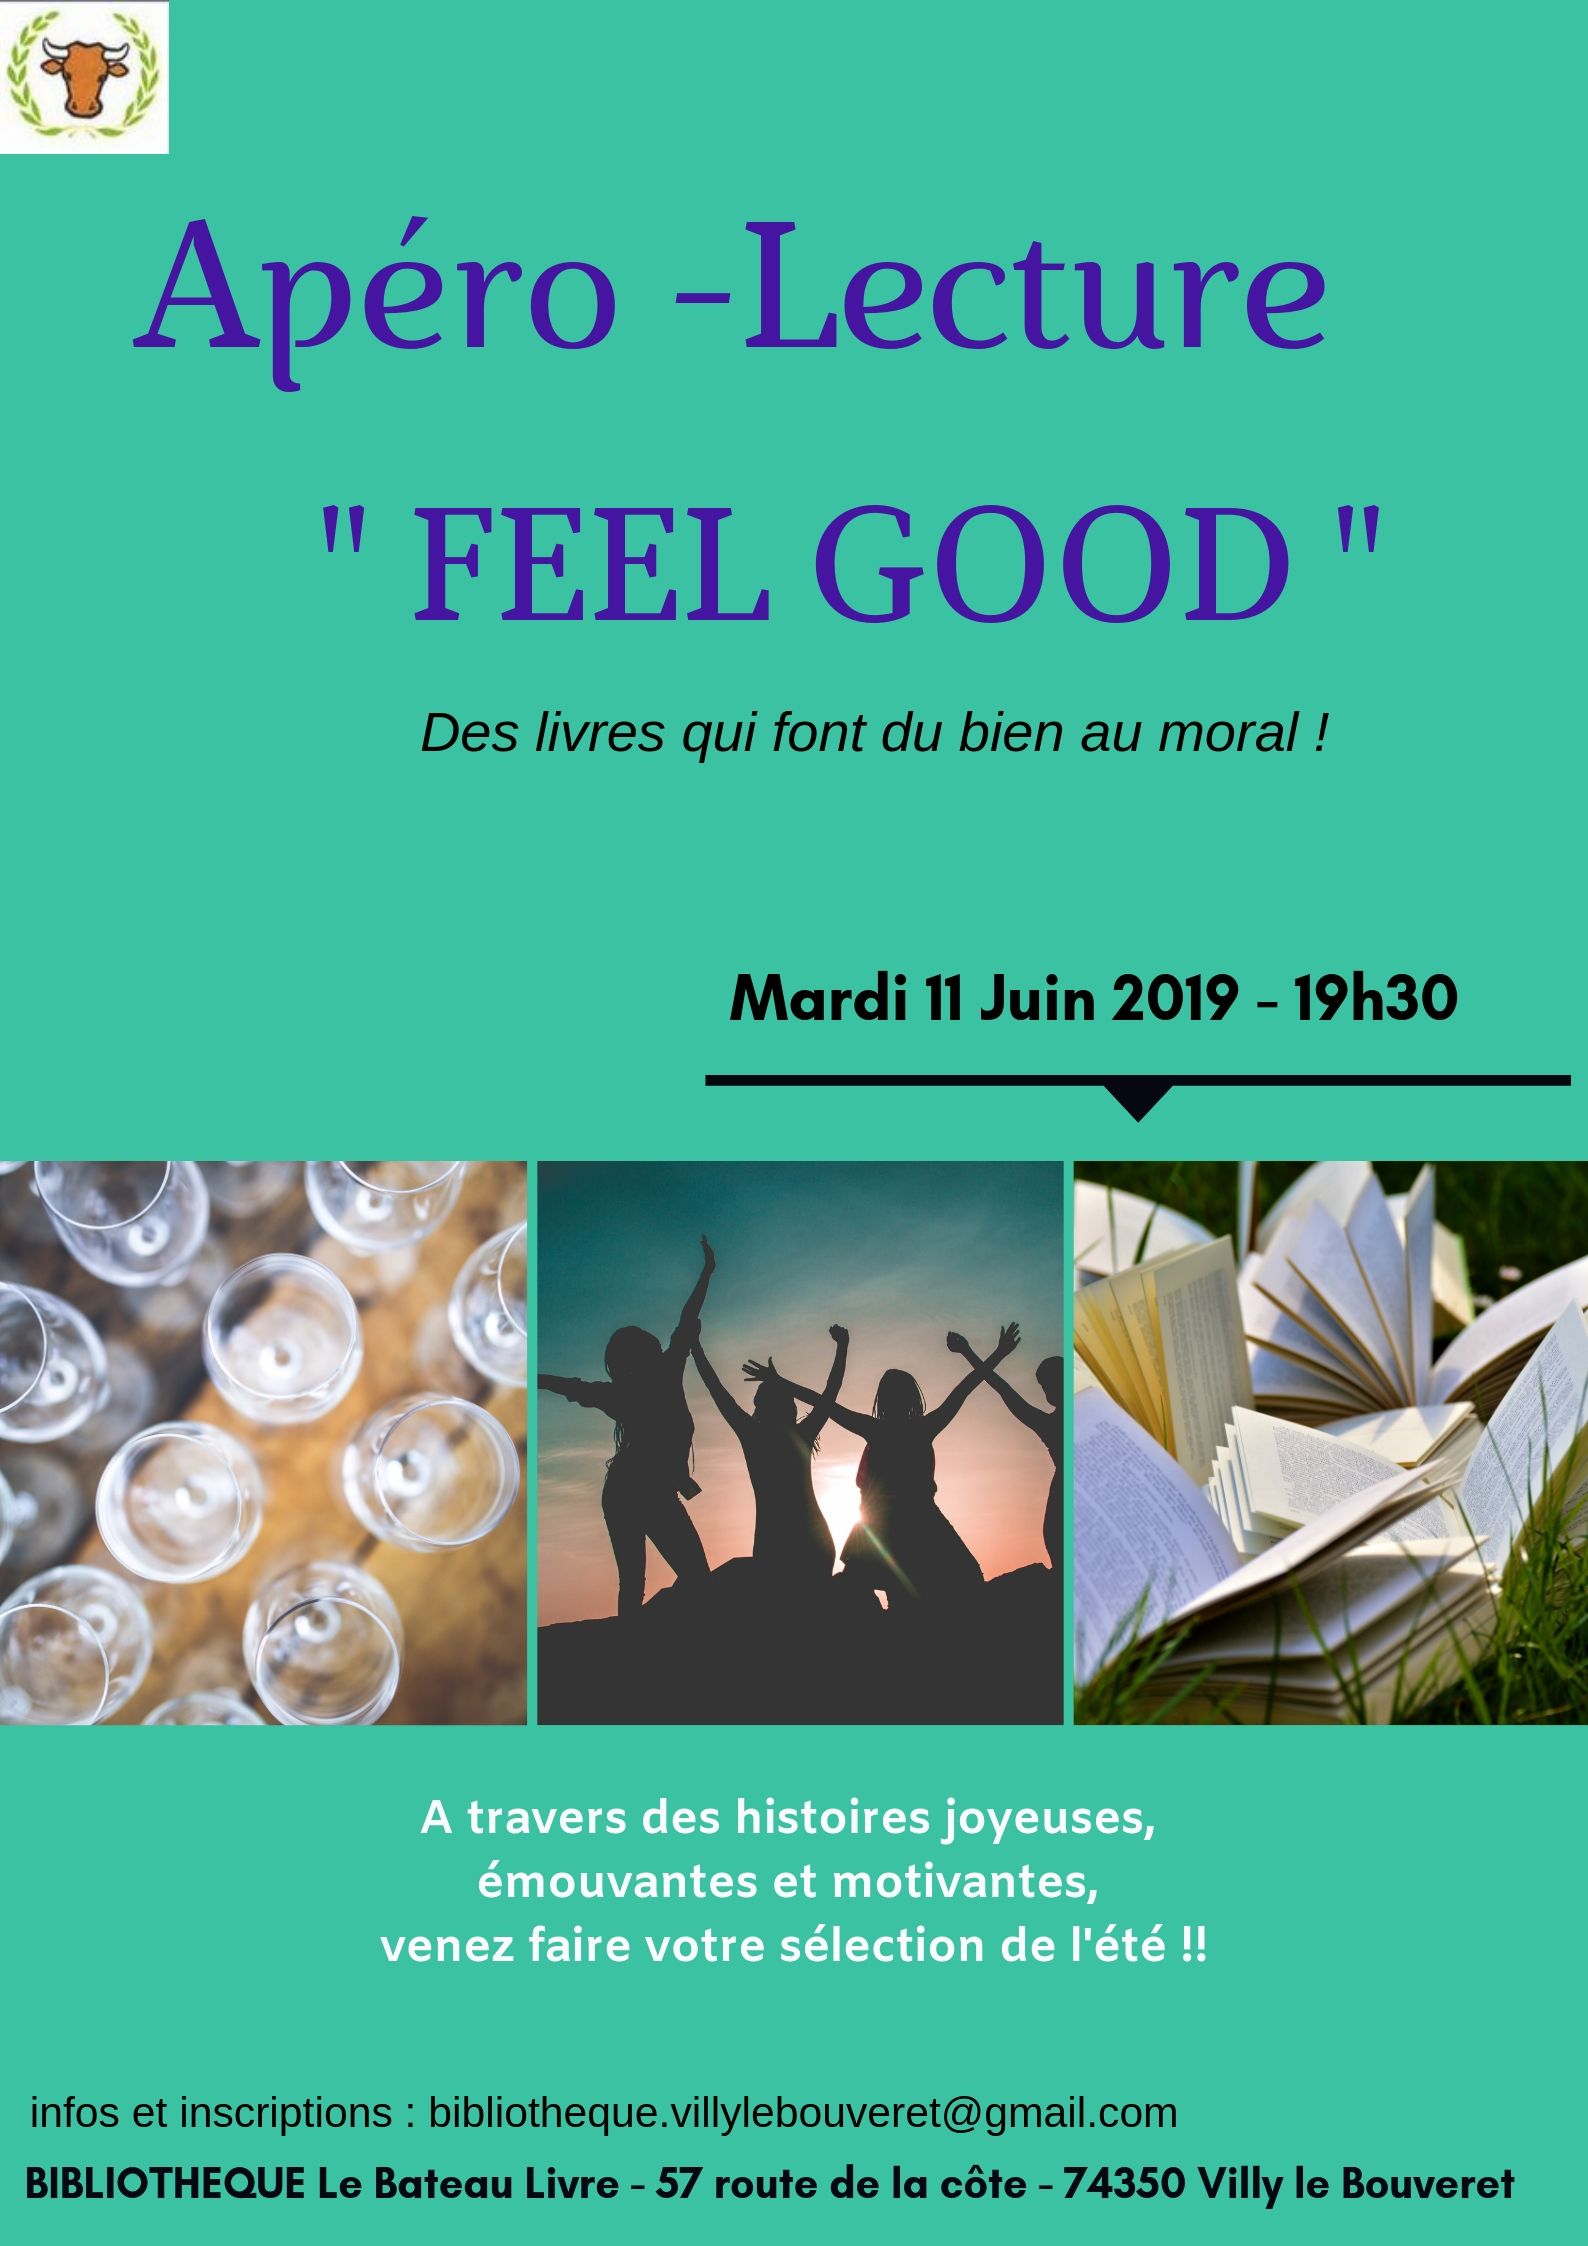 Apéro Lecture "Feel Good"